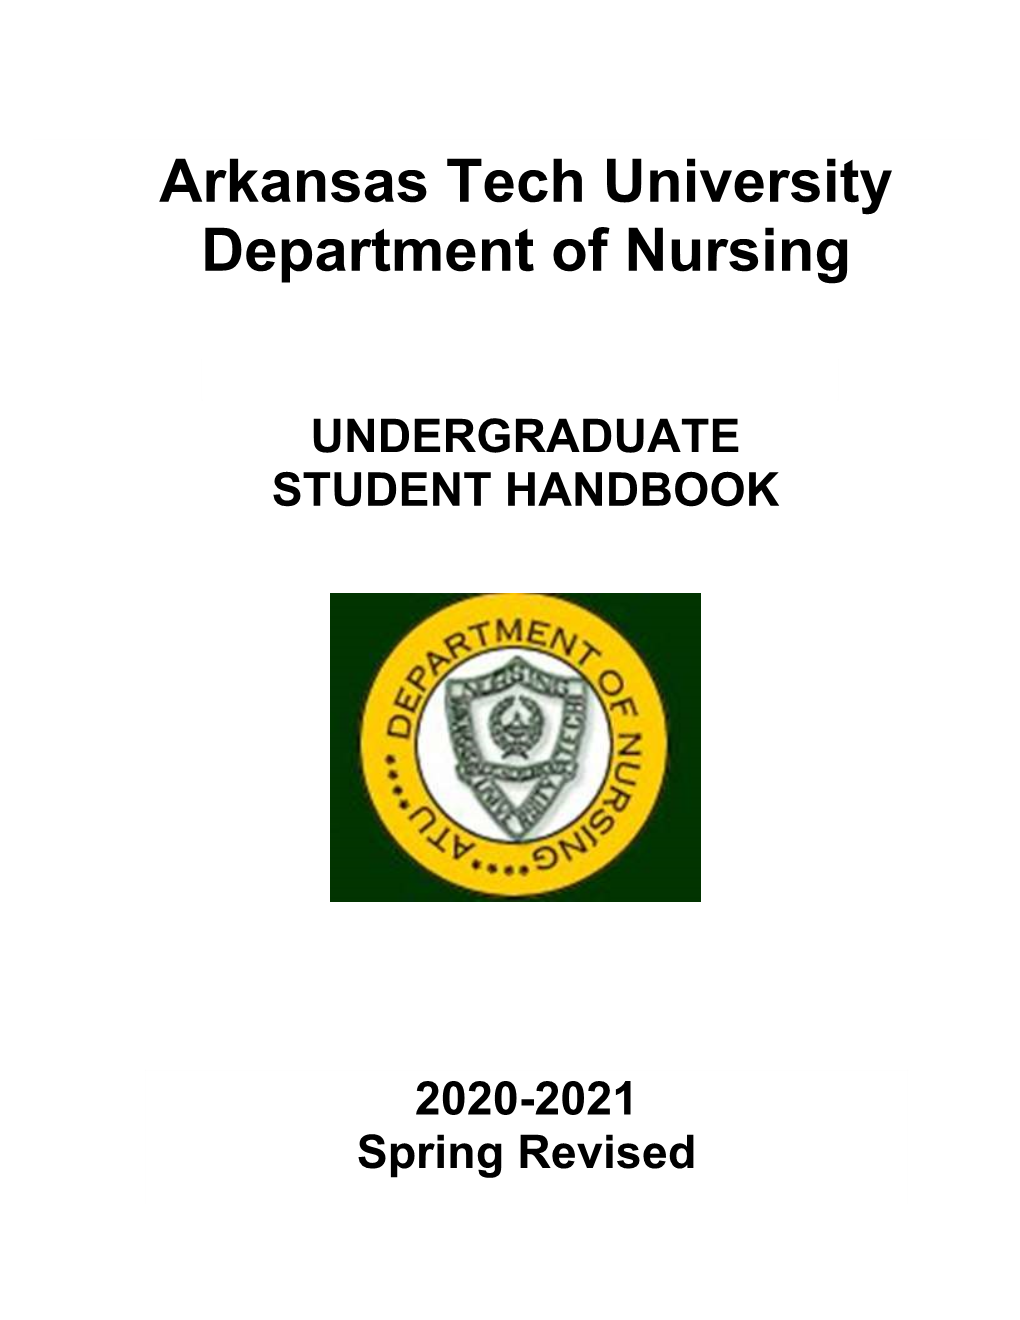 Arkansas Tech University Department of Nursing Undergraduate Student Handbook